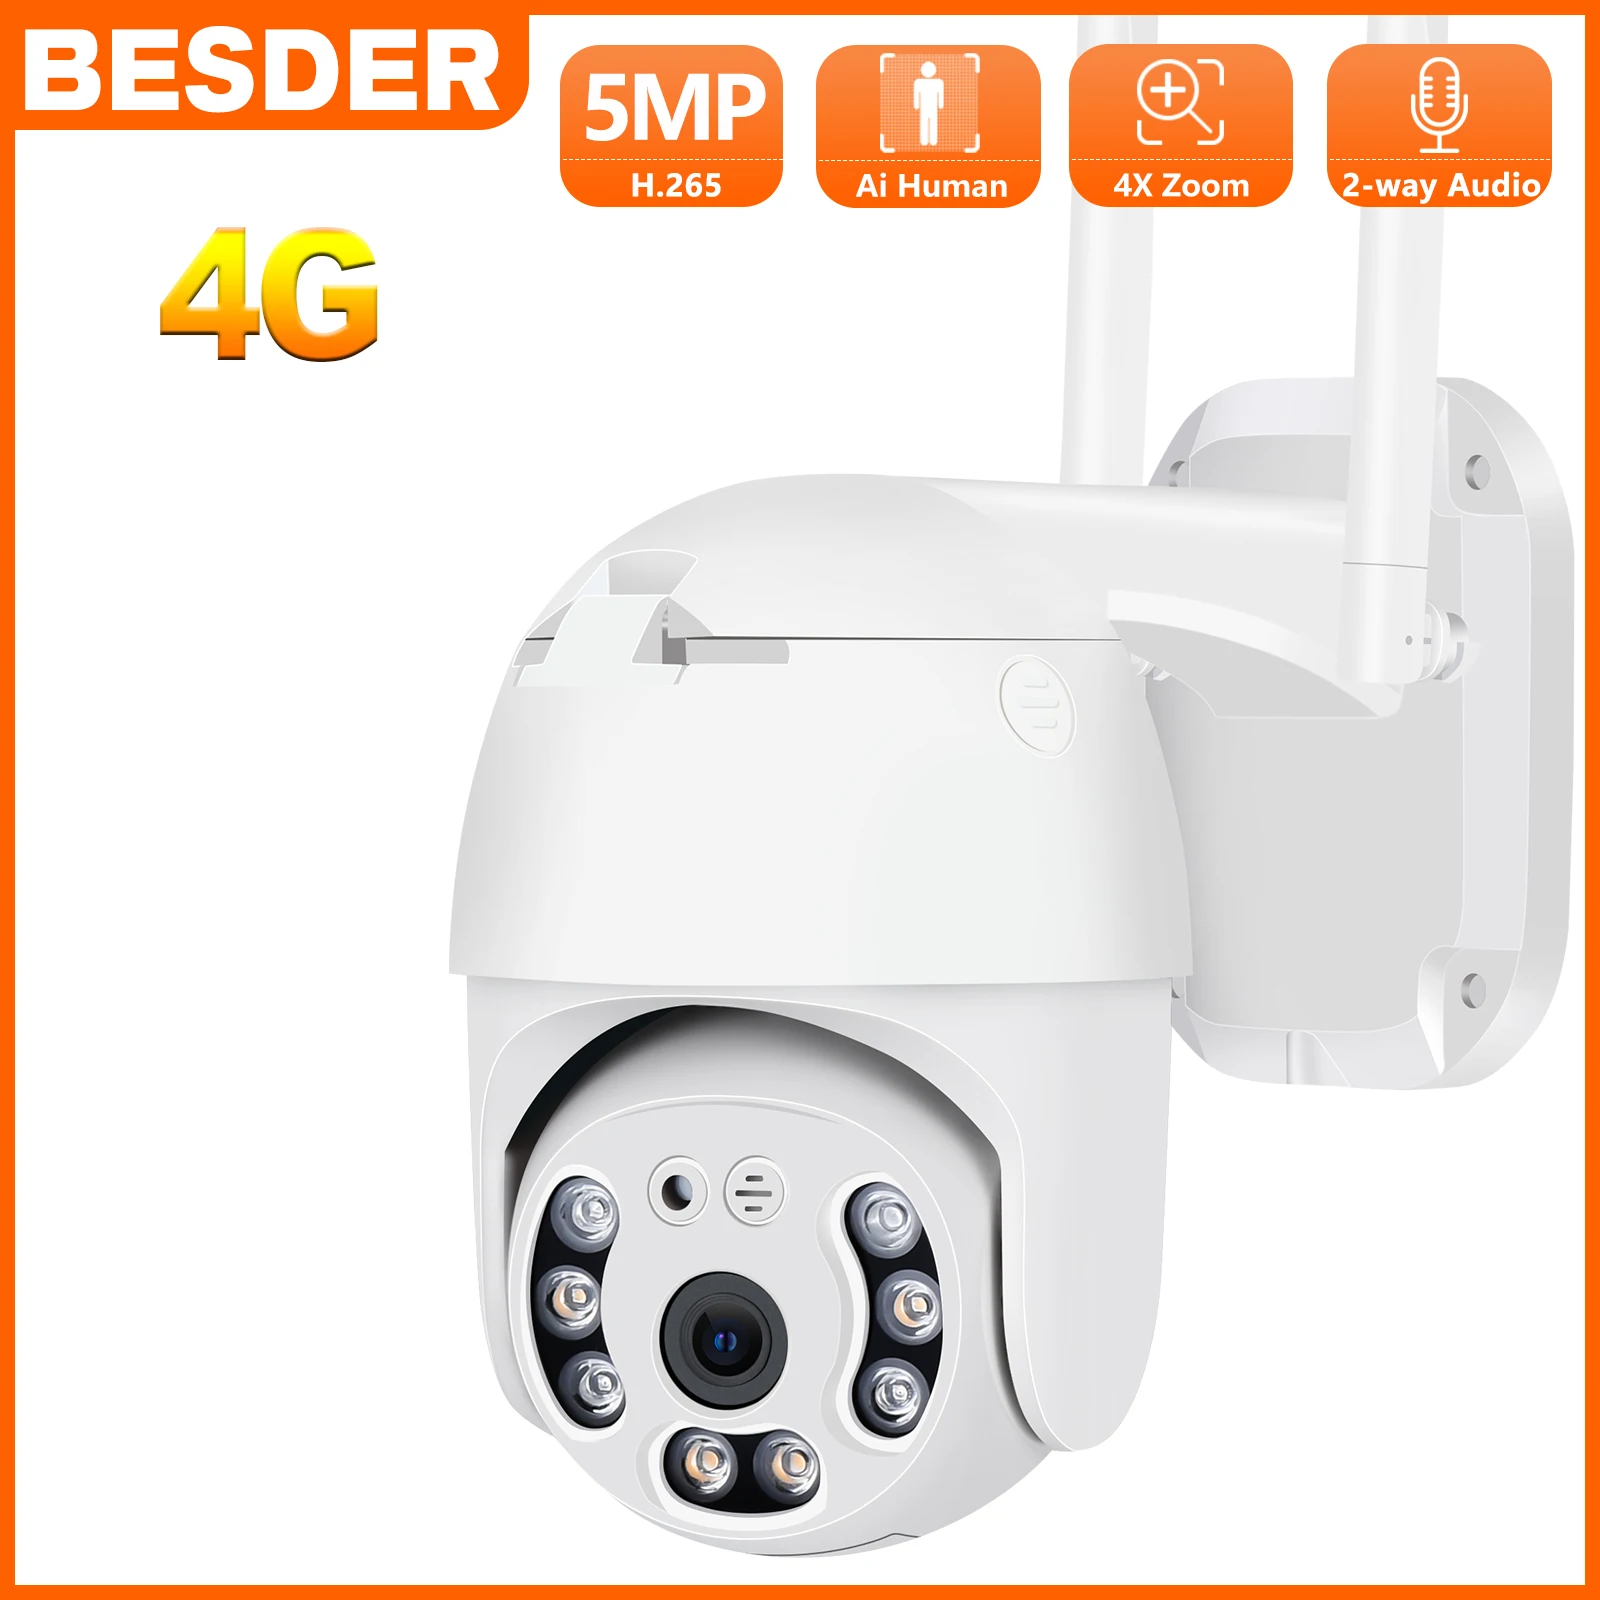 

BESDER 5MP HD 3G 4G SIM Card IP Camera PTZ AI Human Detect Color IR Night Vision 3MP Outdoor CCTV Security Surveillance Camera